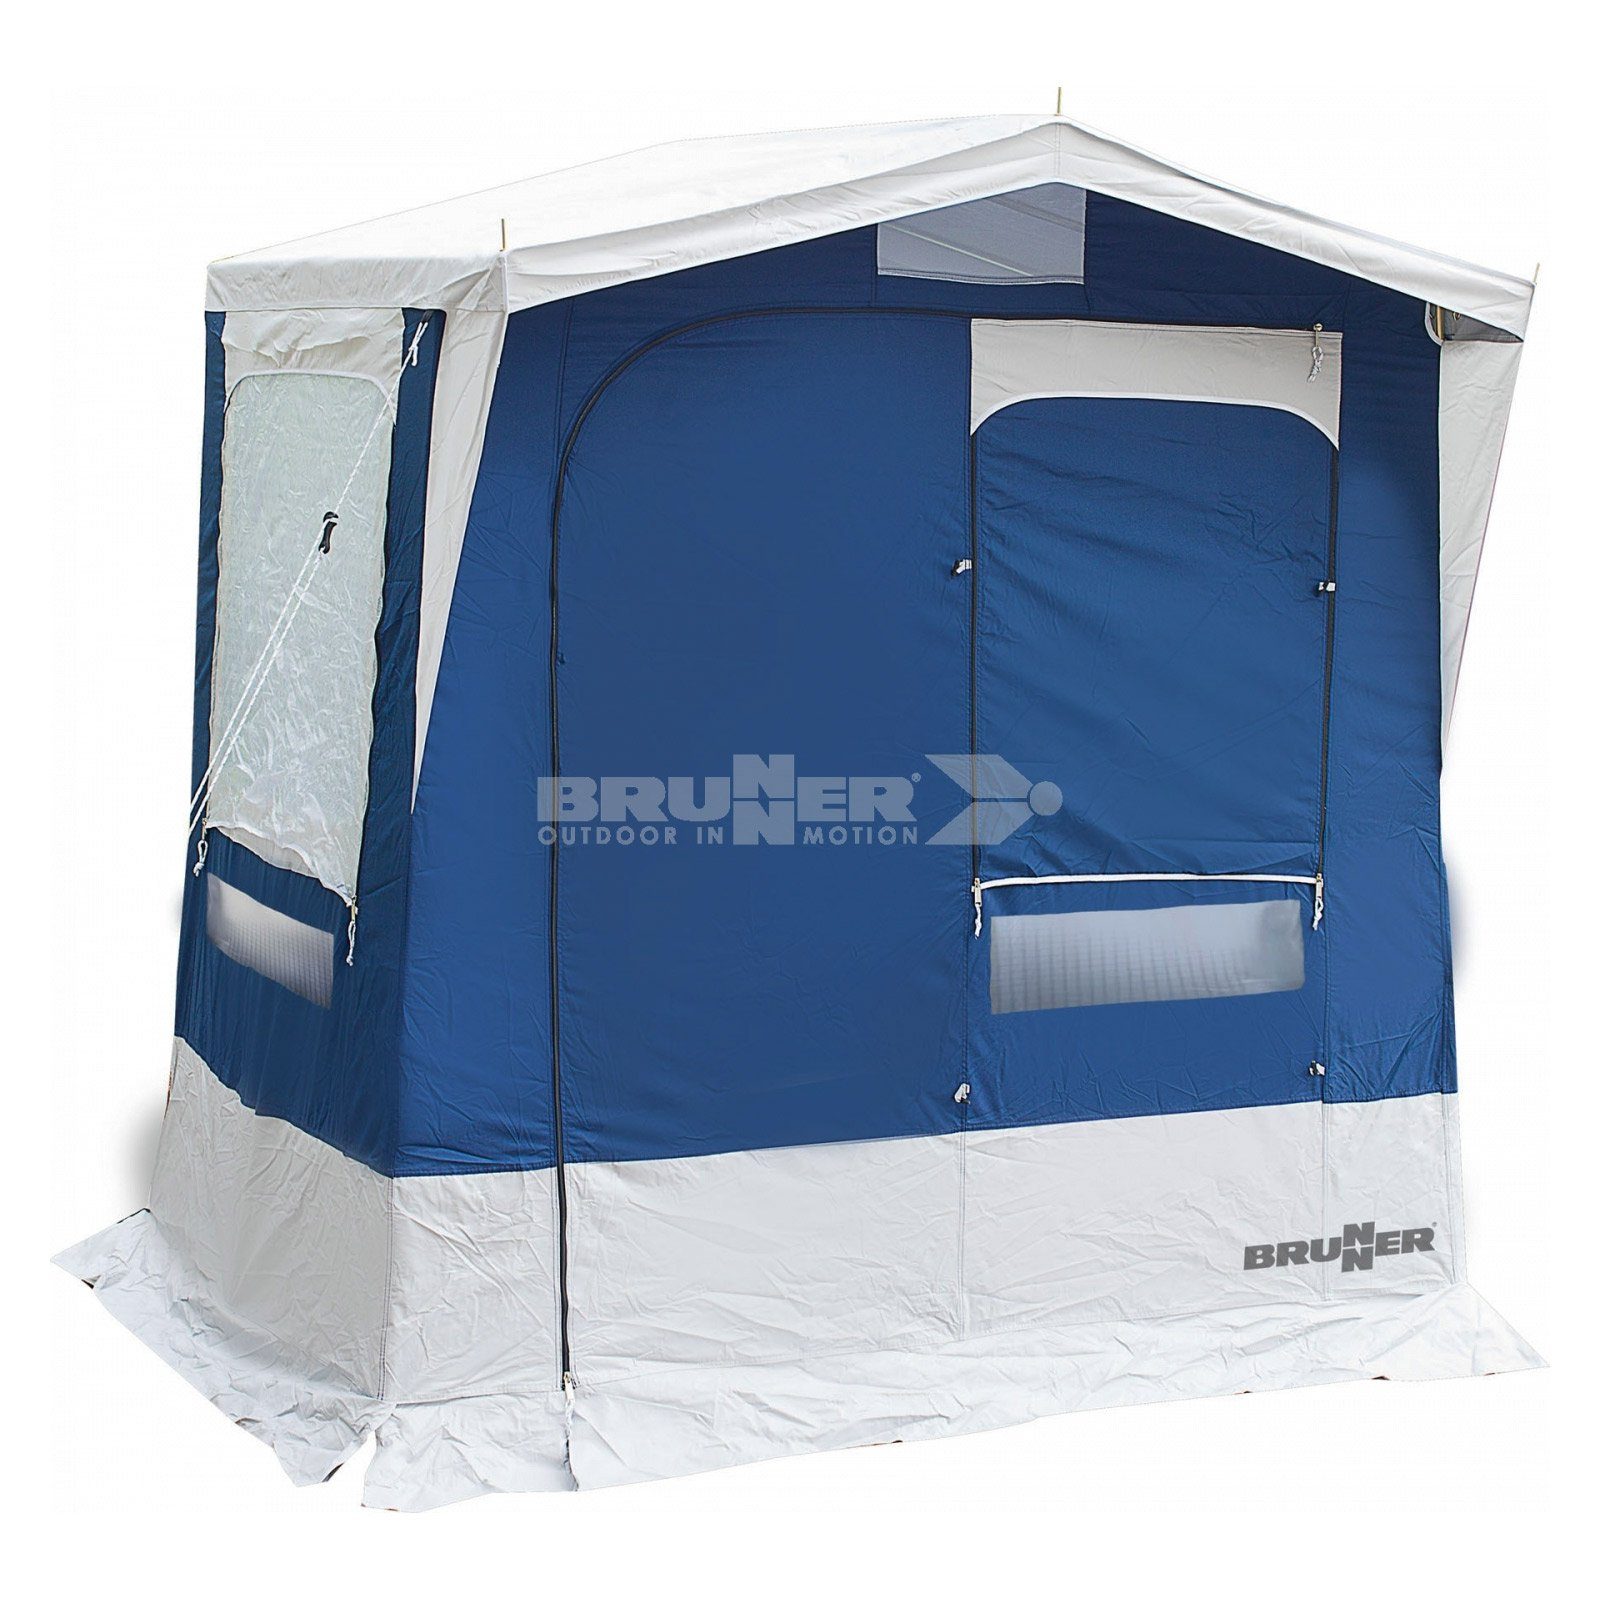 Geräte BRUNNER Küche Lager NG Gusto Küchenzelt Camping Gerätezelt Caravan II Pavillon Zelt,